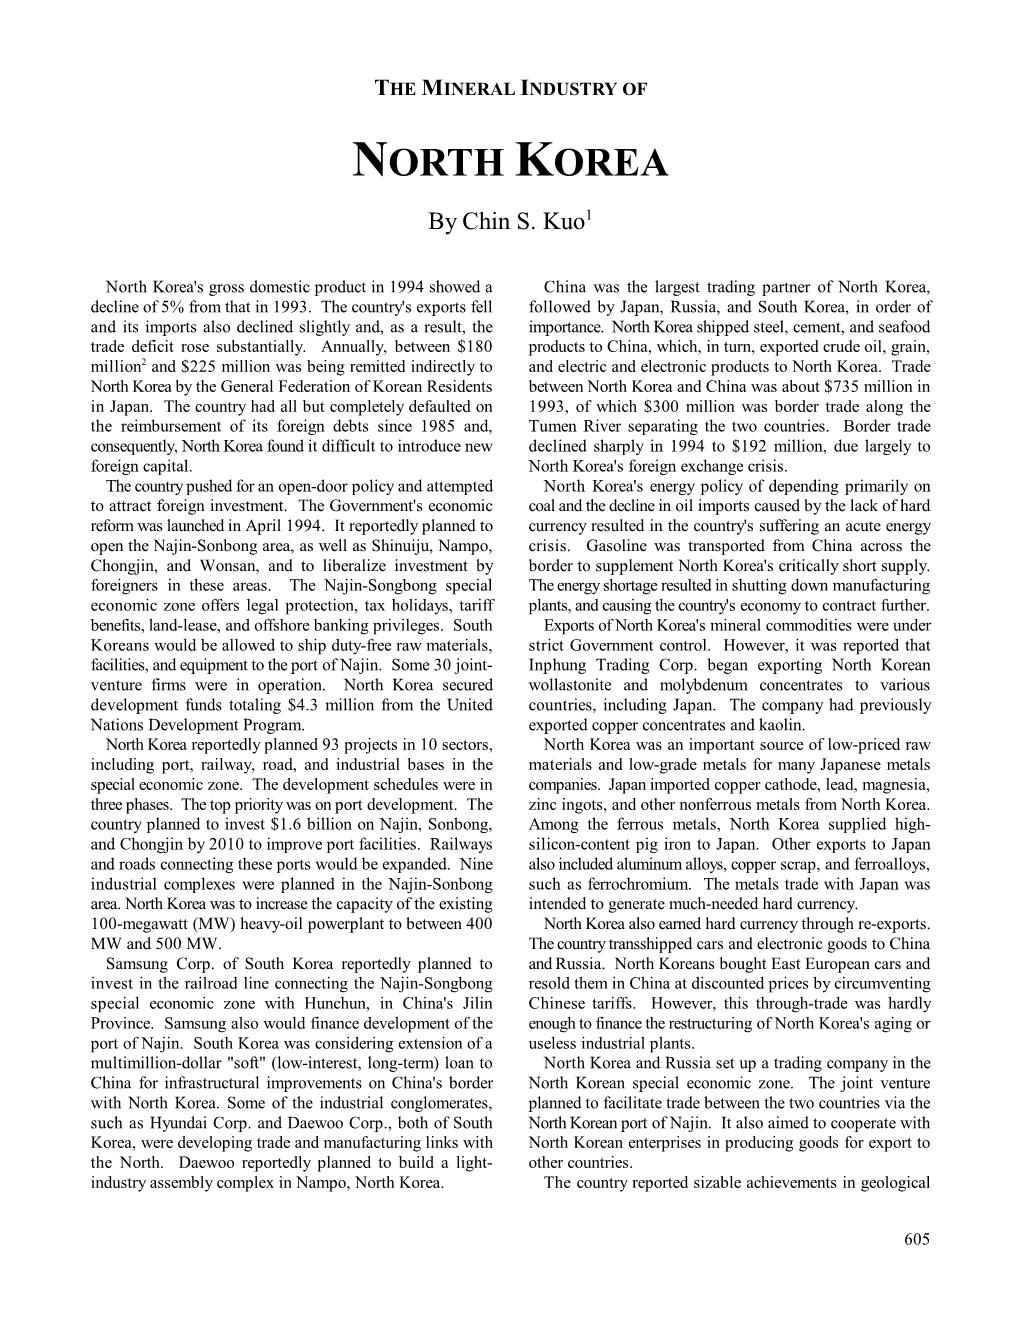 NORTH KOREA by Chin S